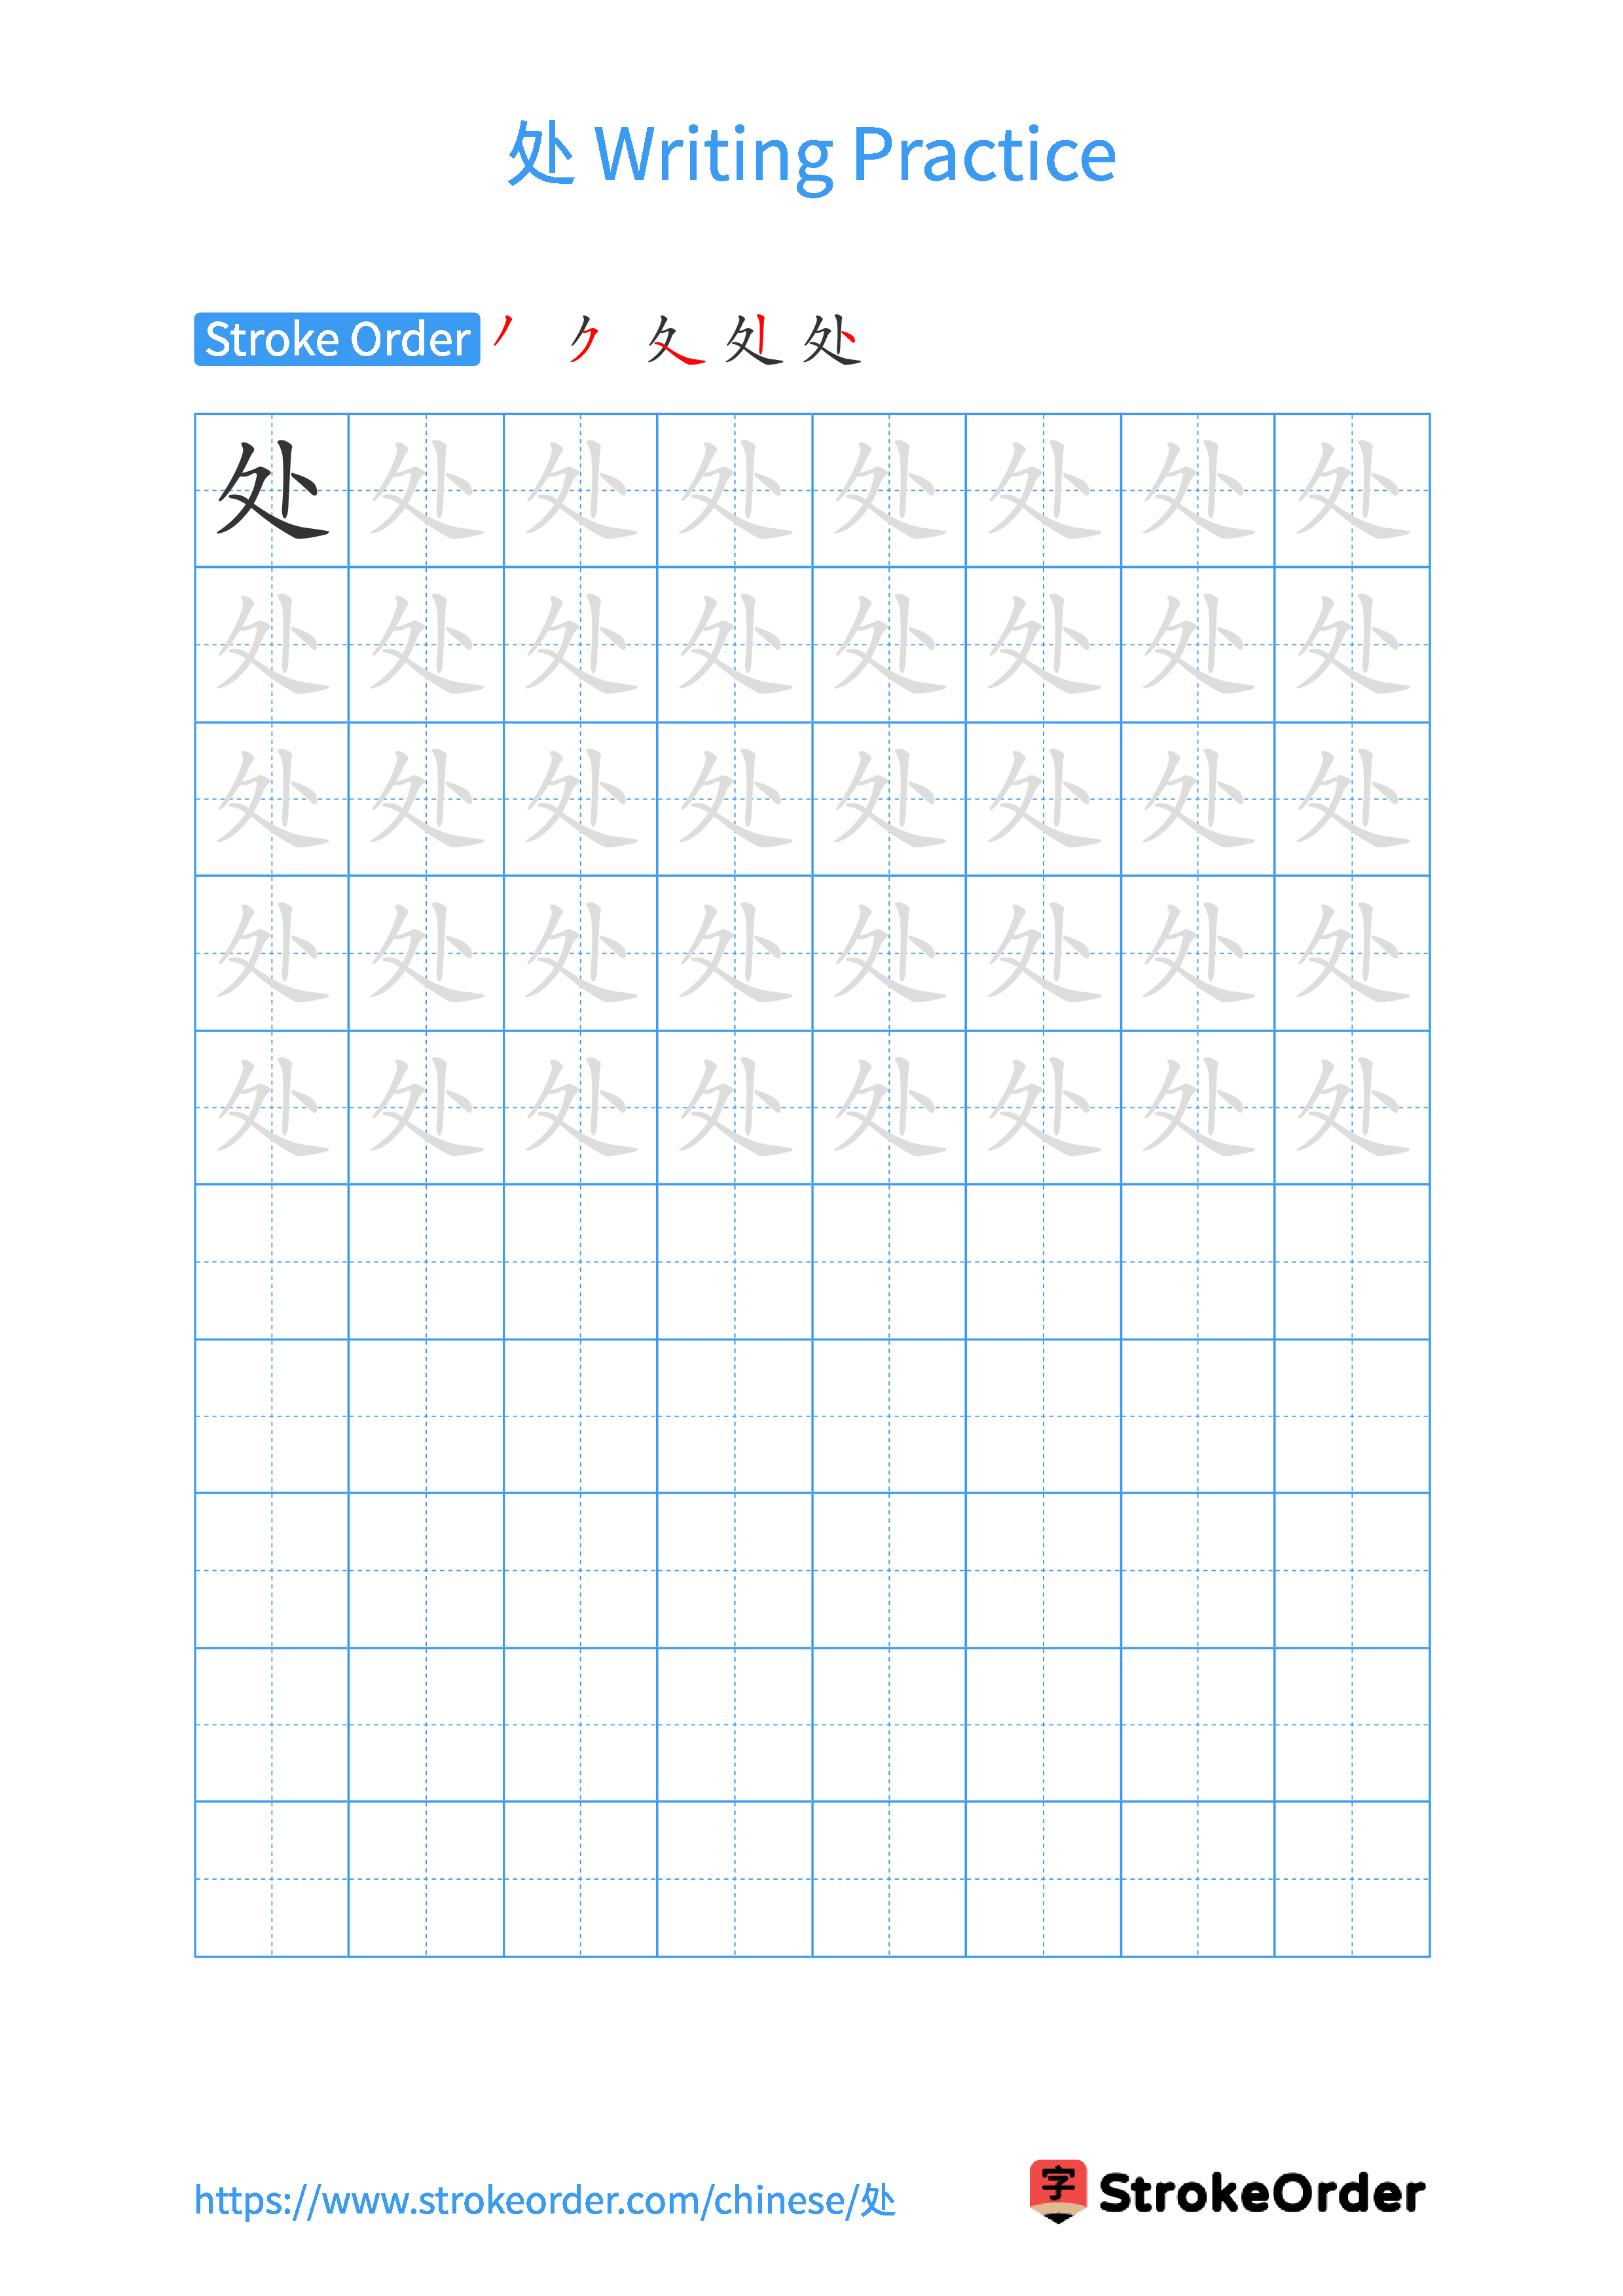 Printable Handwriting Practice Worksheet of the Chinese character 处 in Portrait Orientation (Tian Zi Ge)